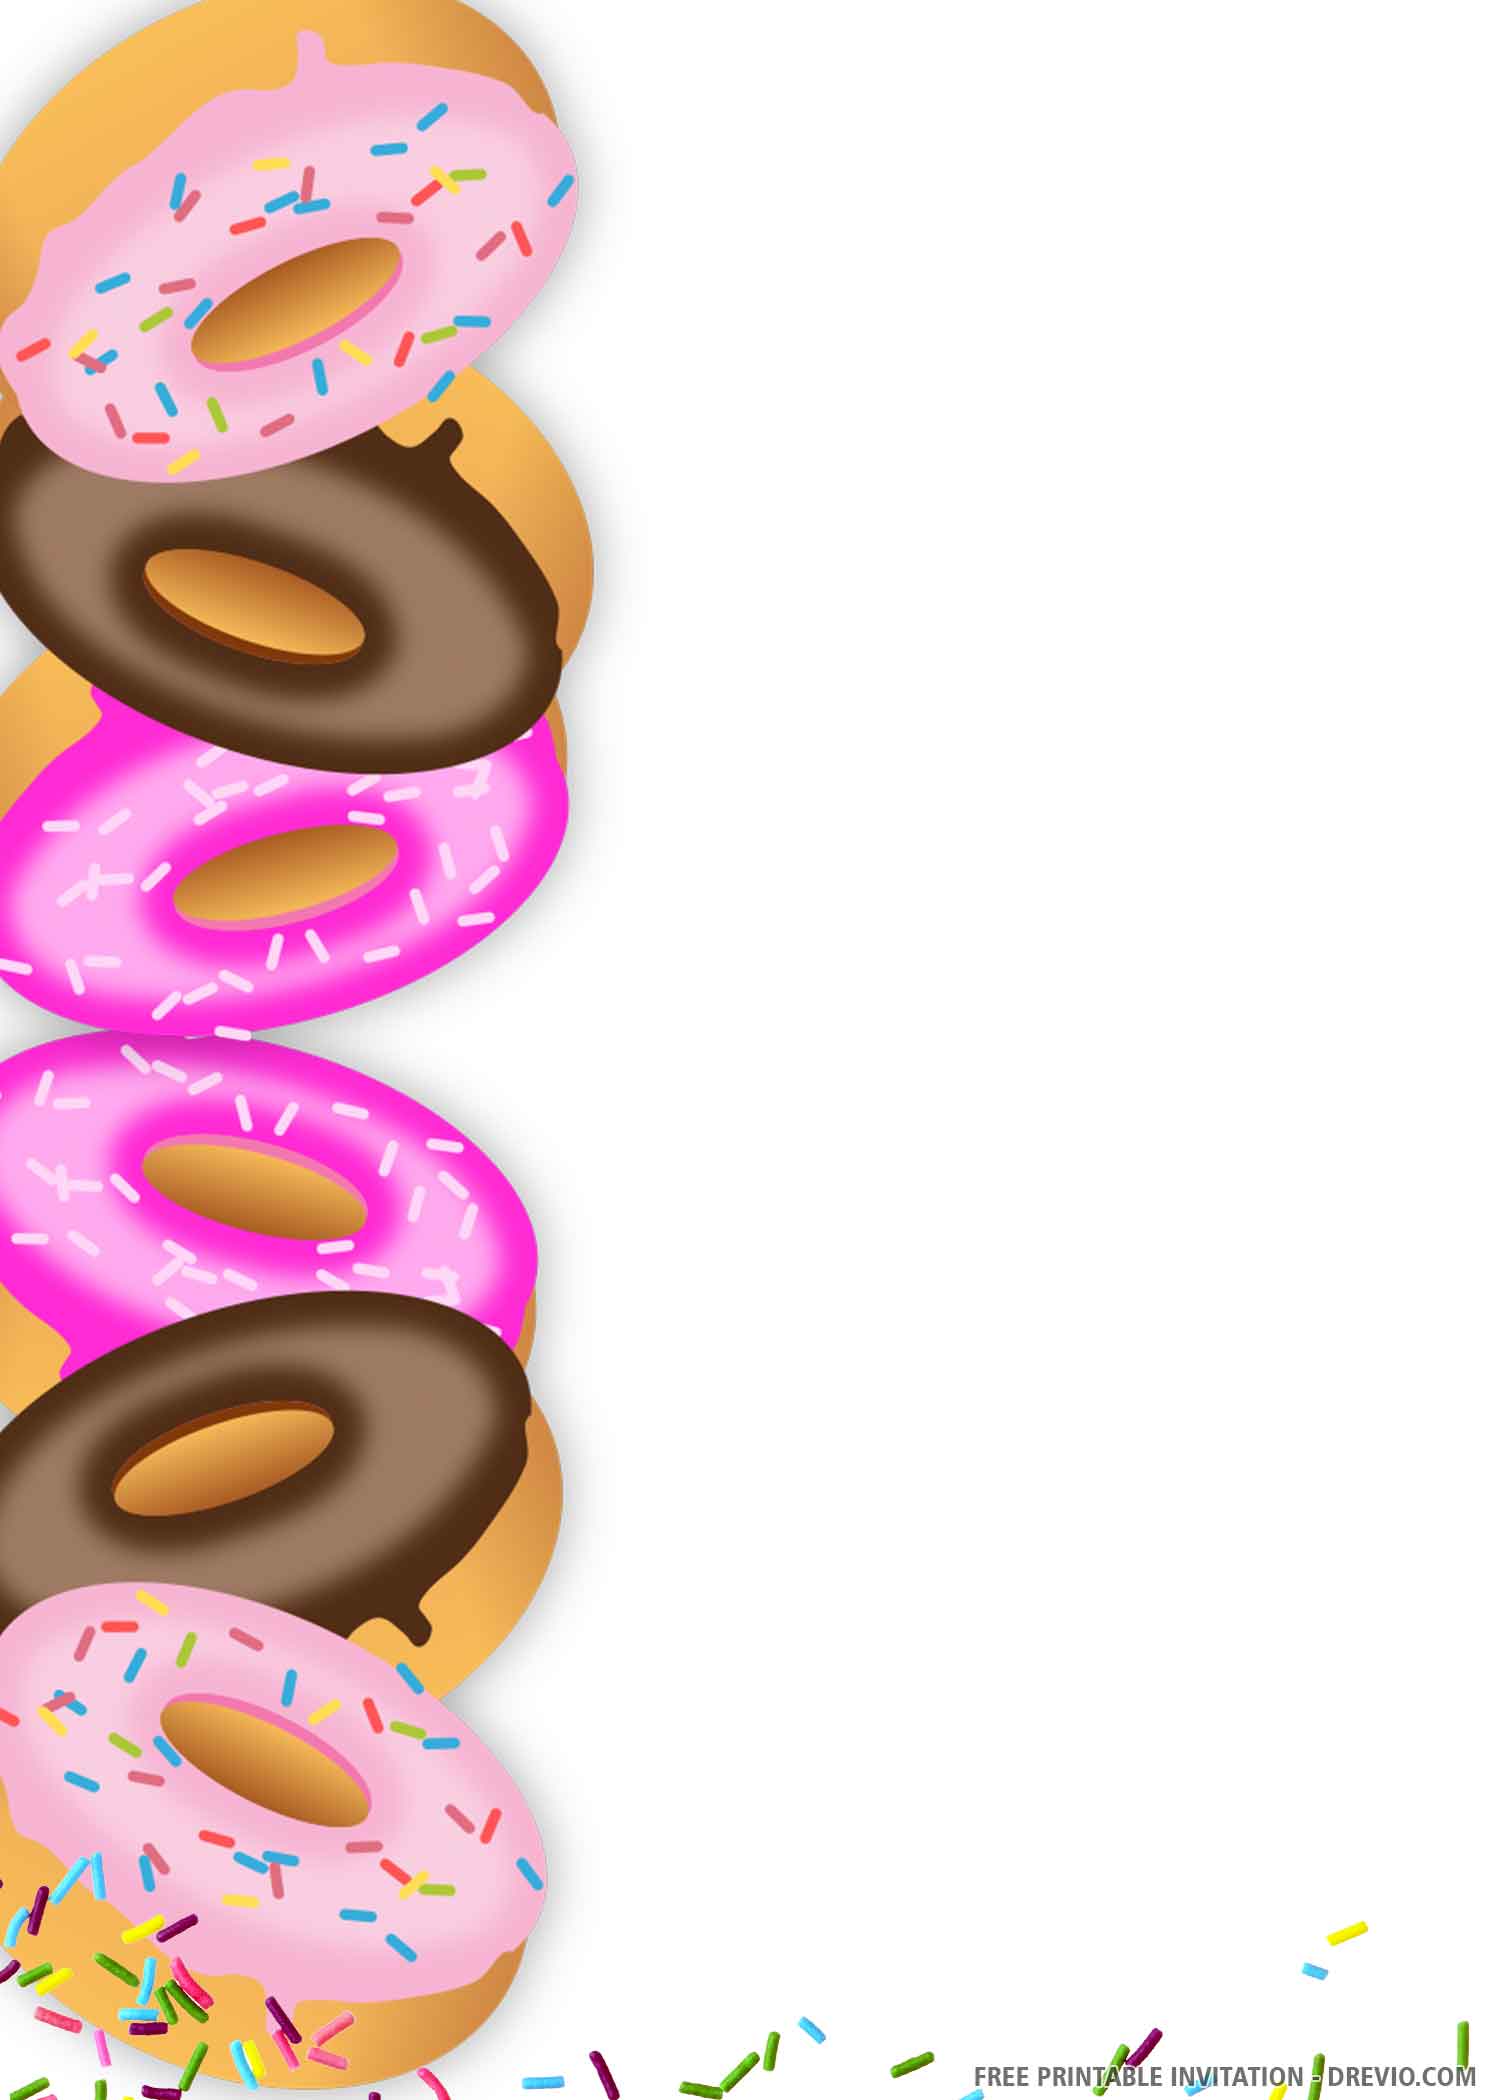 (FREE PRINTABLE) Donuts Birthday Invitation Templates Download